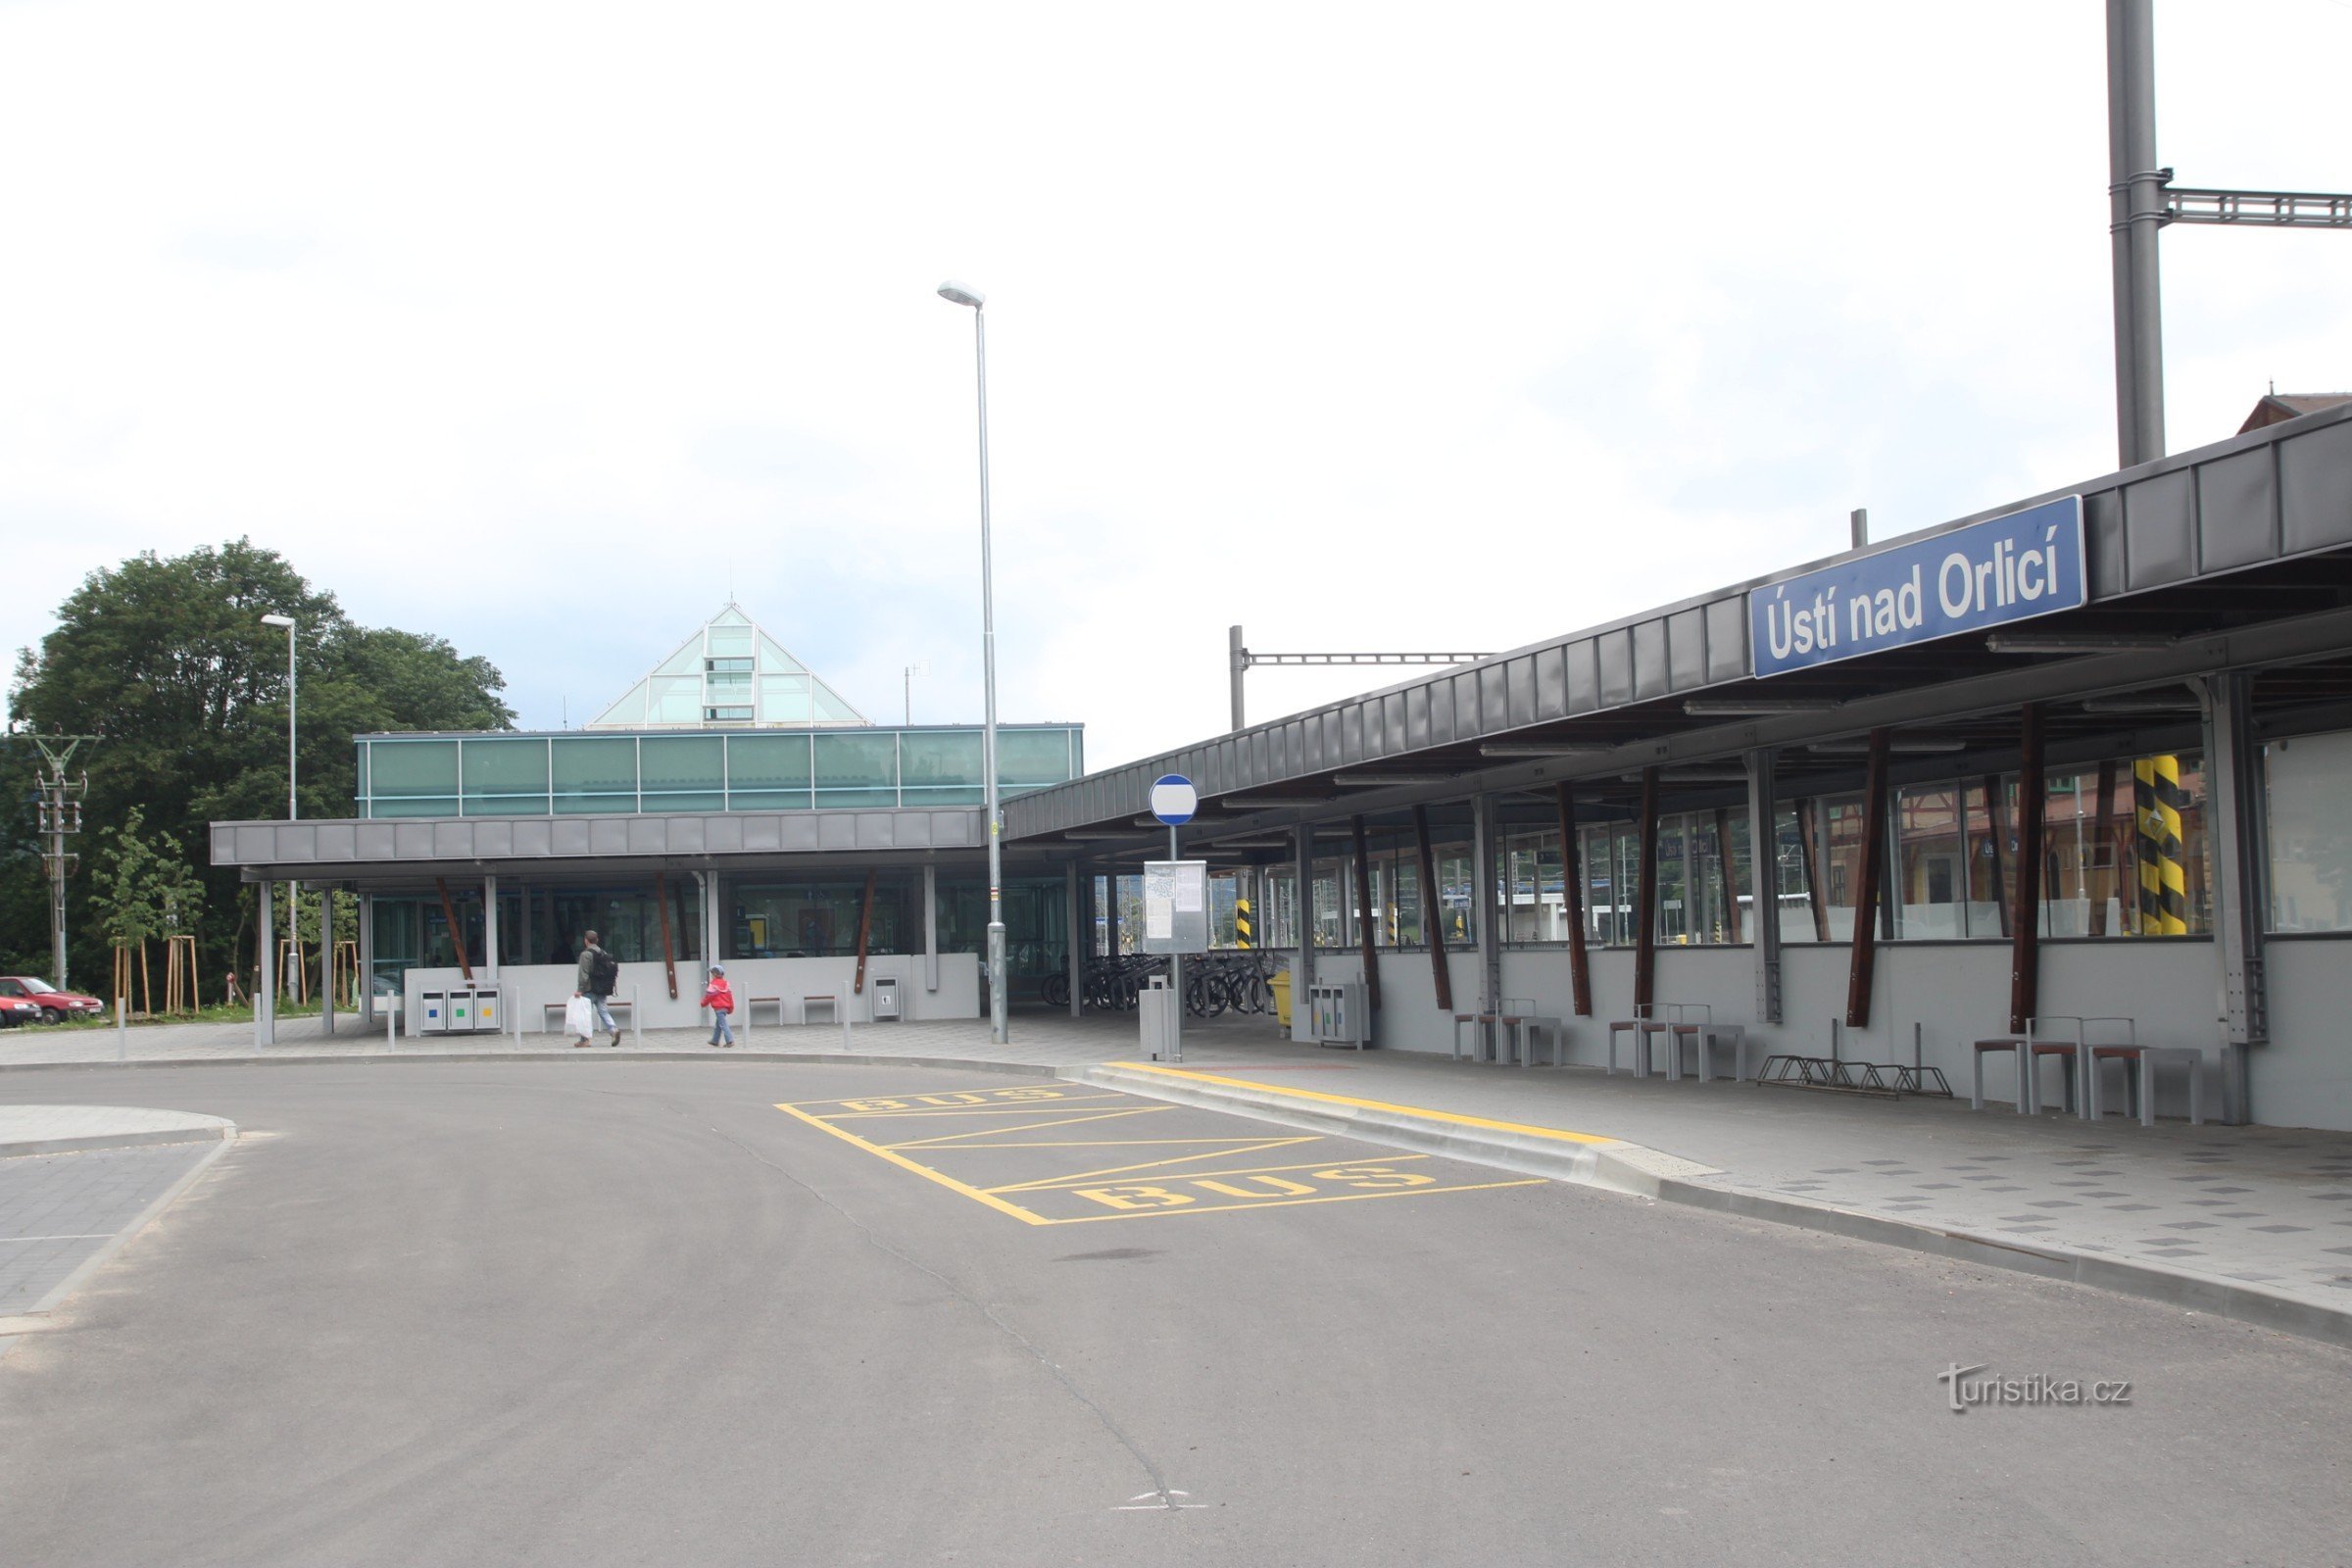 A nova estação ferroviária de Ústí nad Orlicí